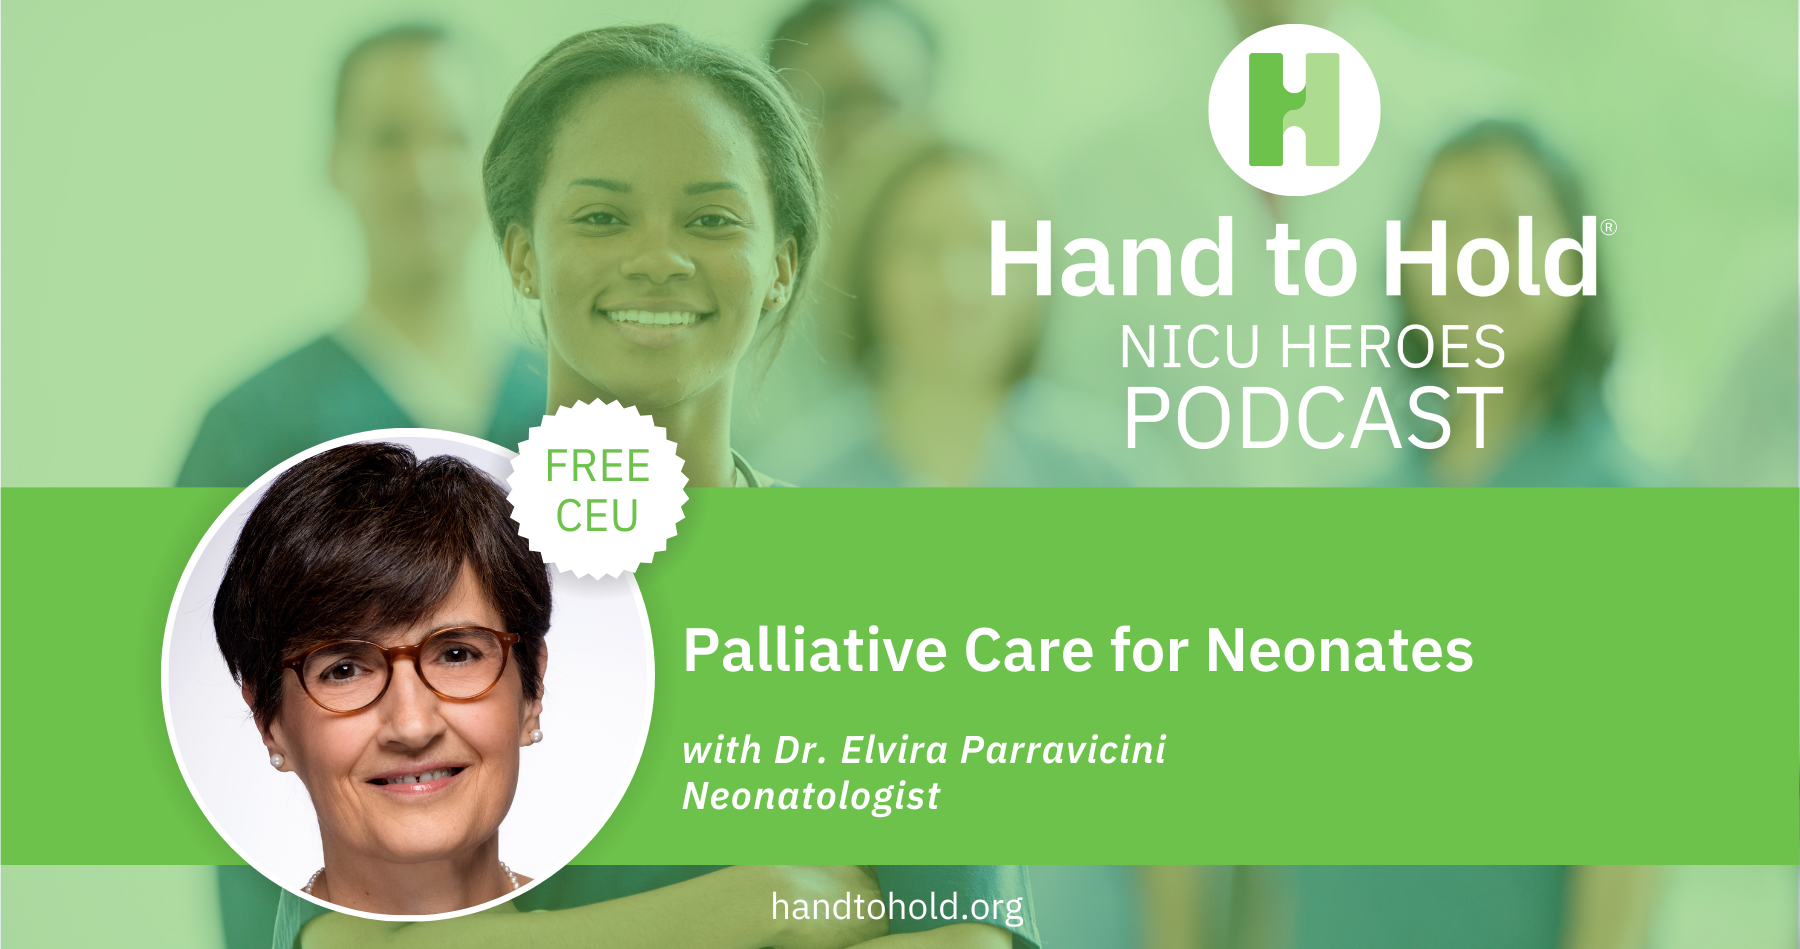 Dr. Elvira Parravicini, hand to hold nicu heroes podcast, palliative care